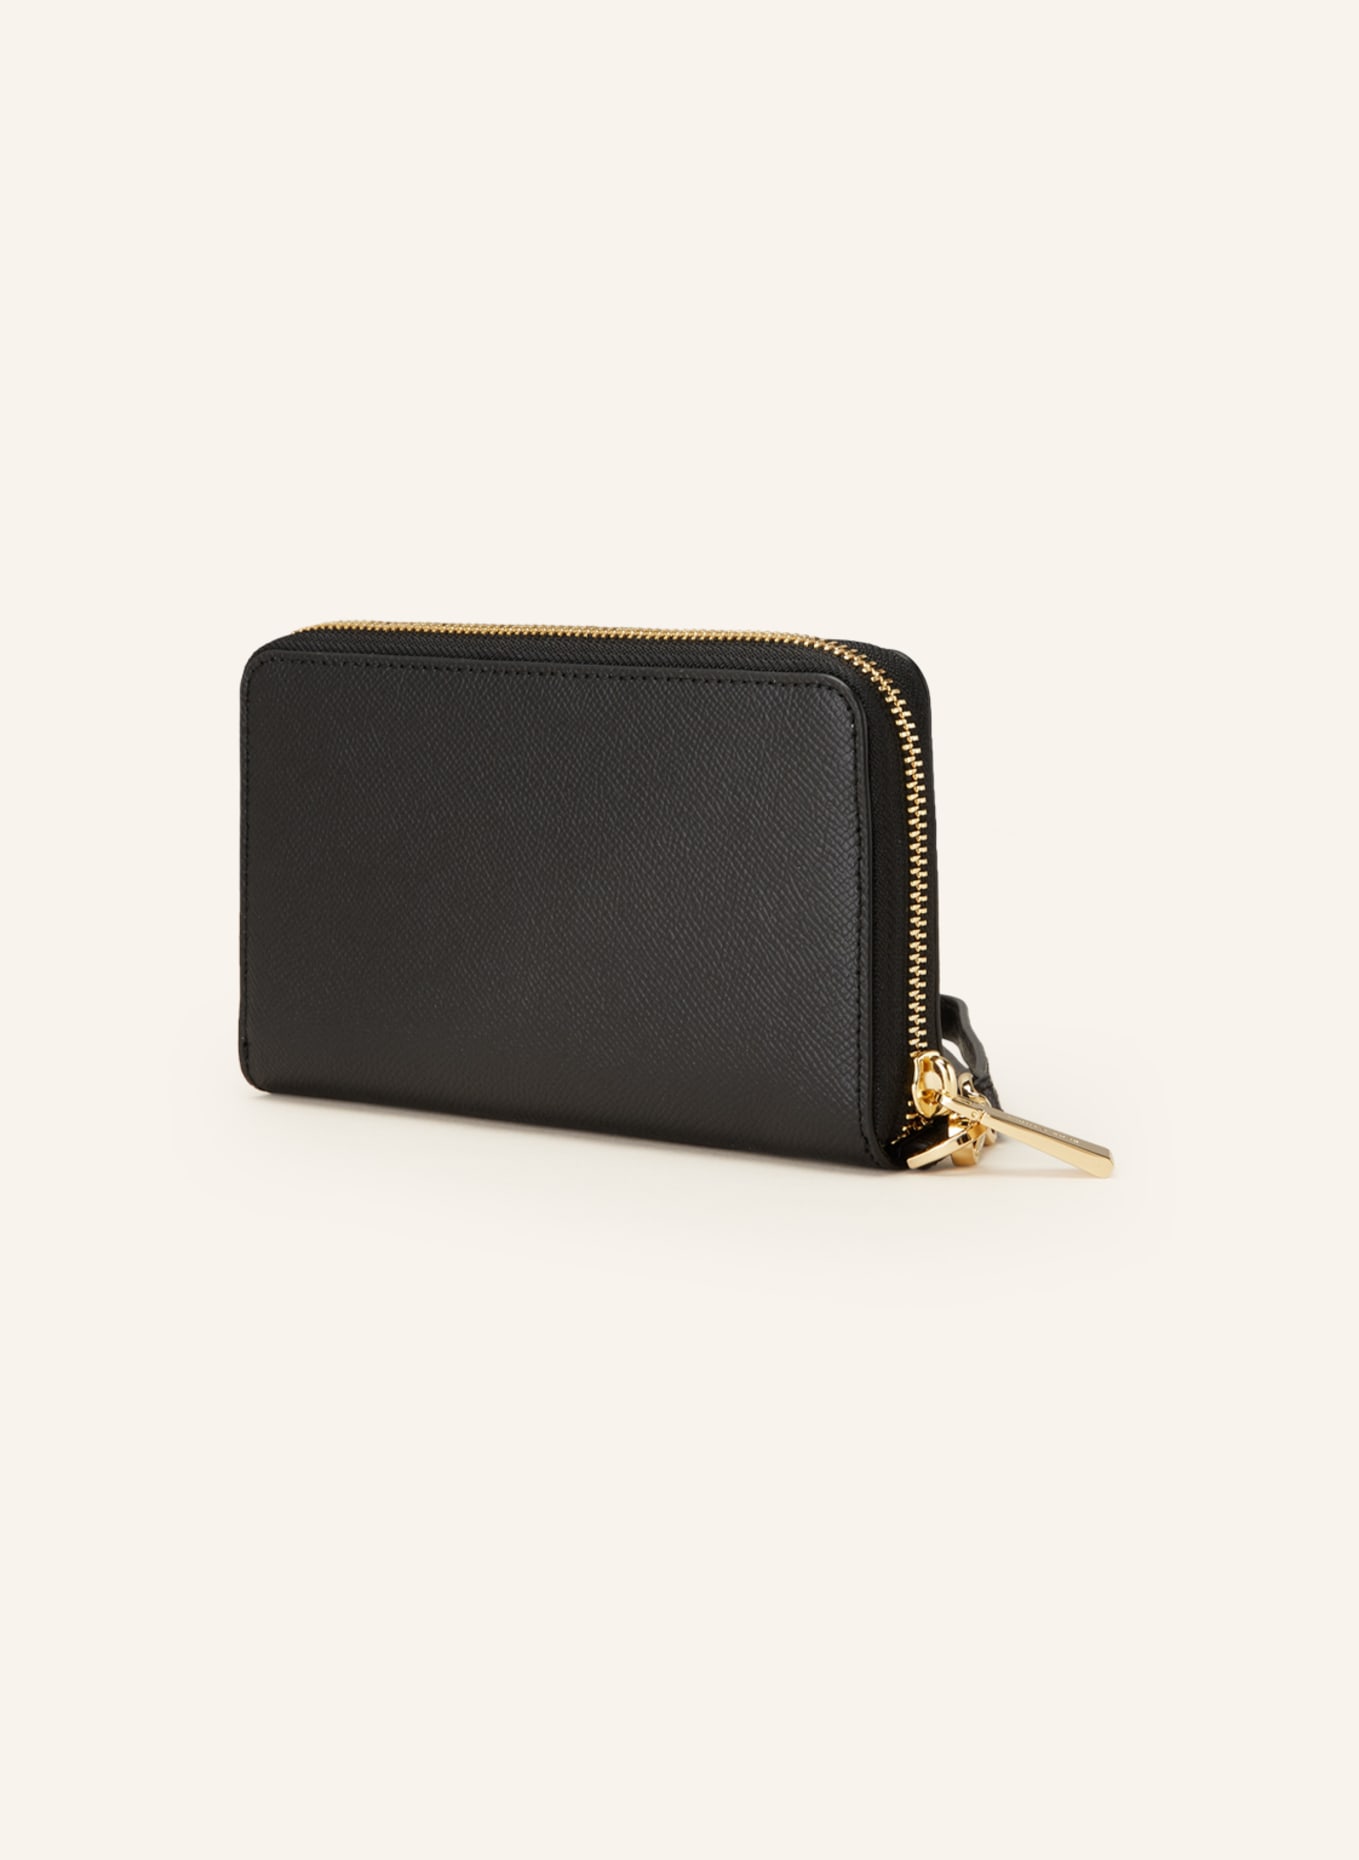 MICHAEL KORS Wallet JET SET with smartphone compartment, Color: BLACK (Image 2)